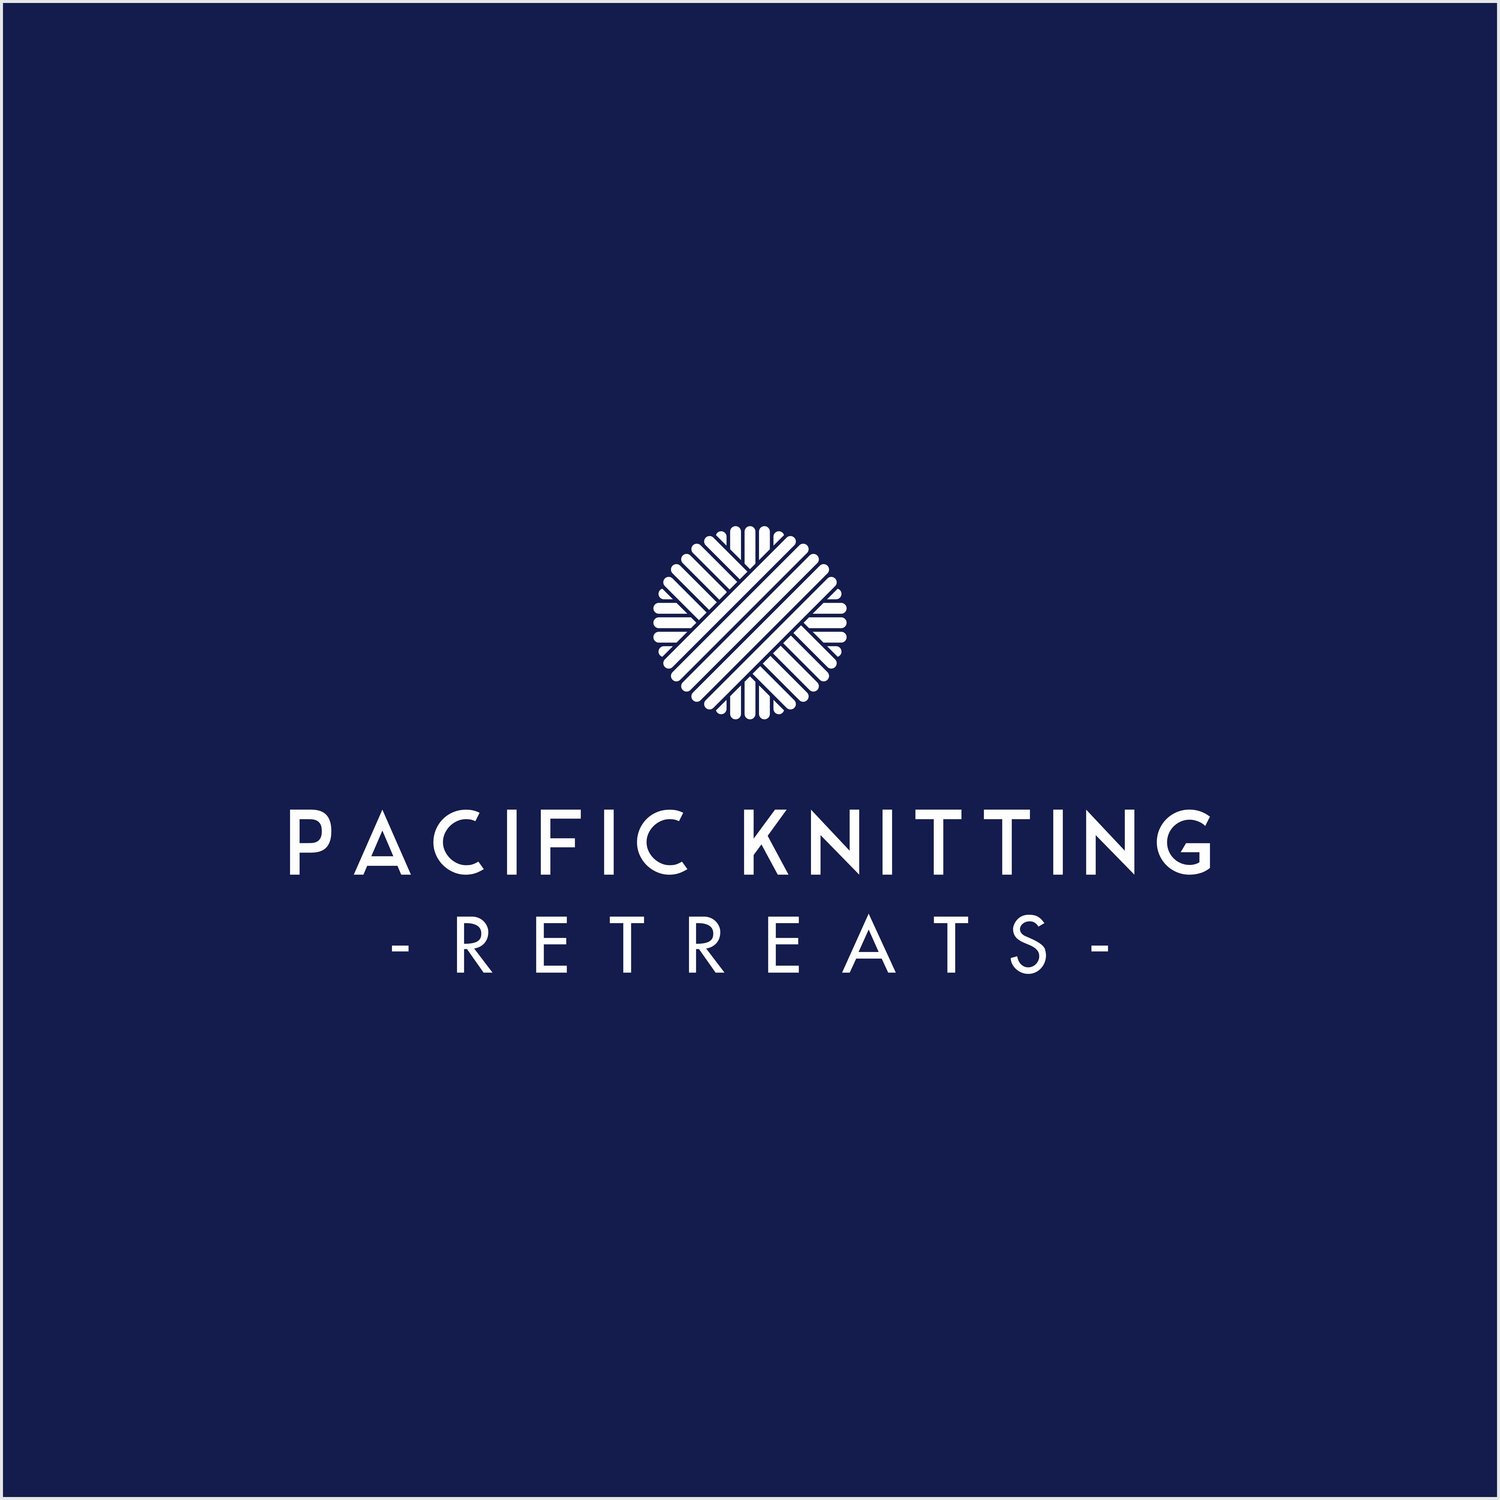  Pacific Knitting Retreats